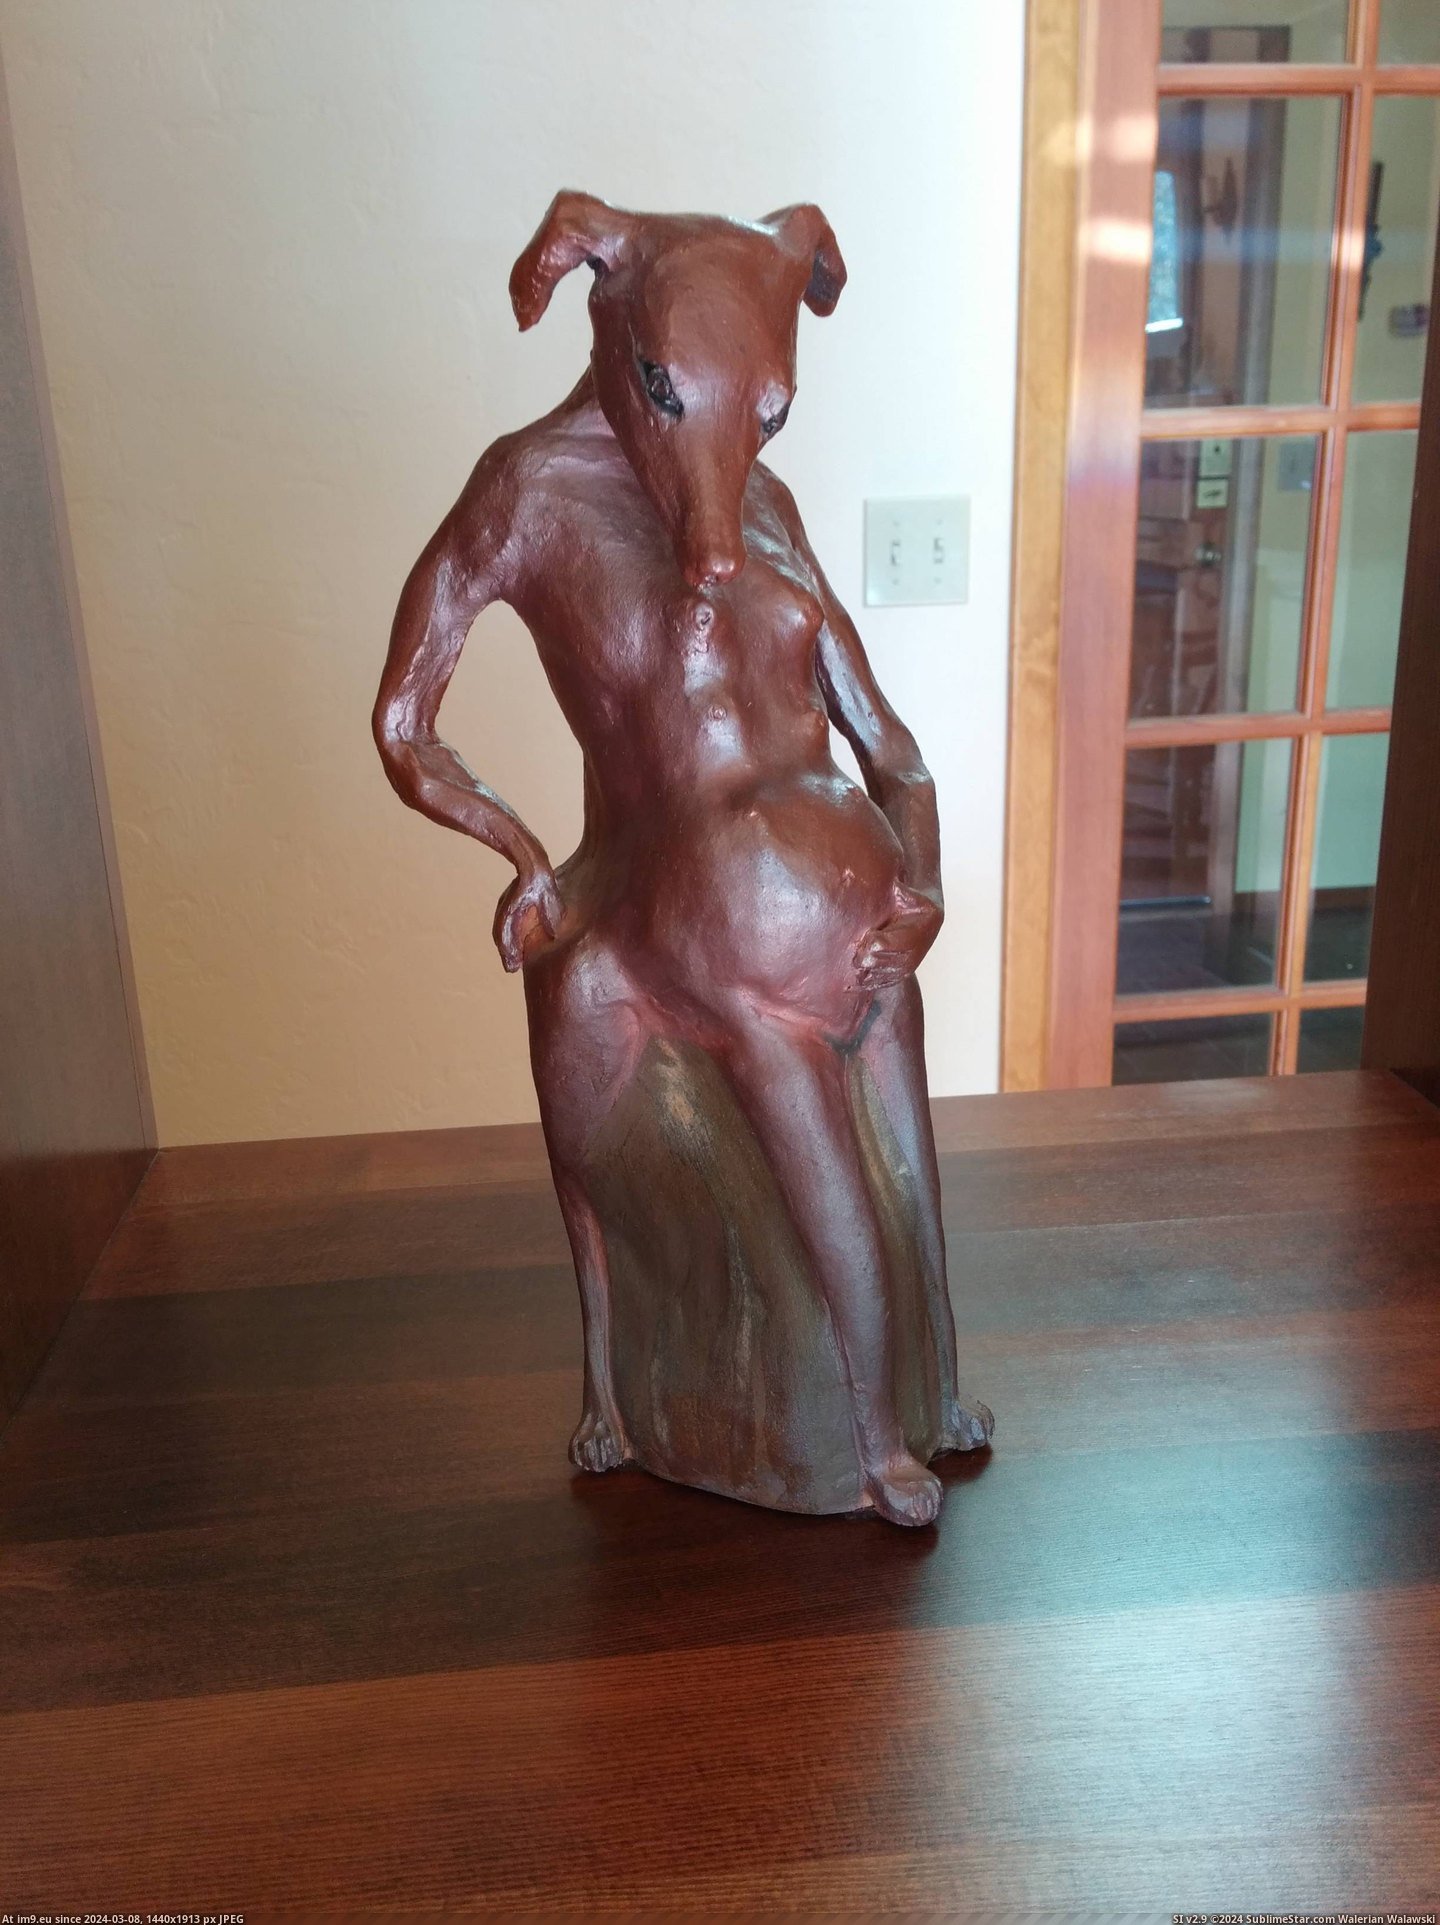 #Wtf #Statue #Creepy [Wtf] Creepy statue Pic. (Bild von album My r/WTF favs))